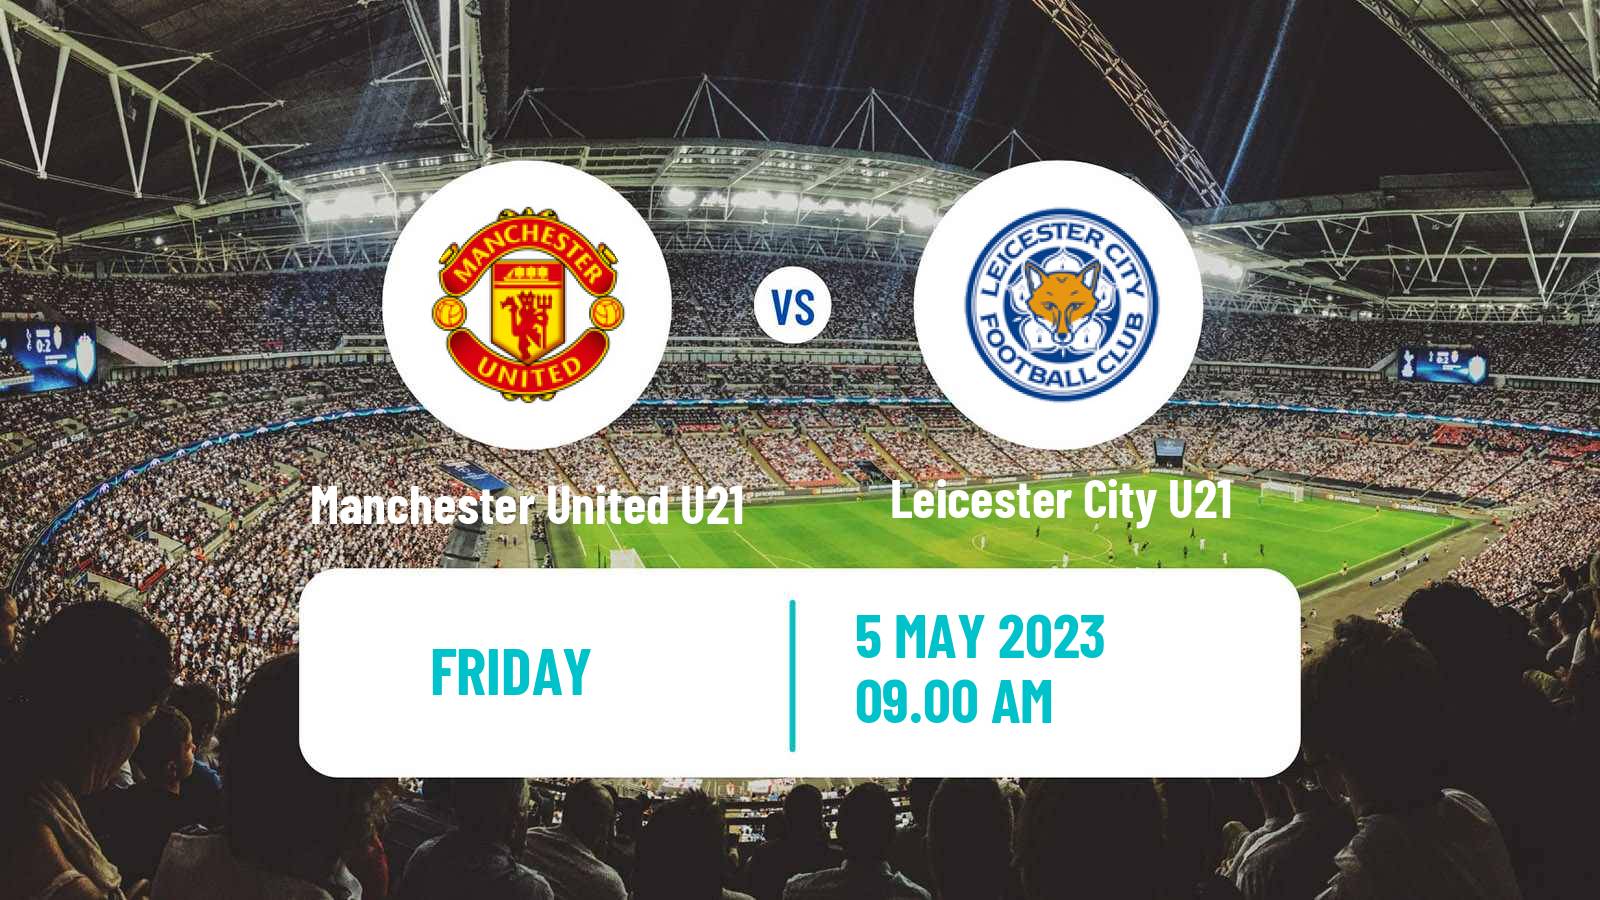 Soccer English Premier League 2 Manchester United U21 - Leicester City U21